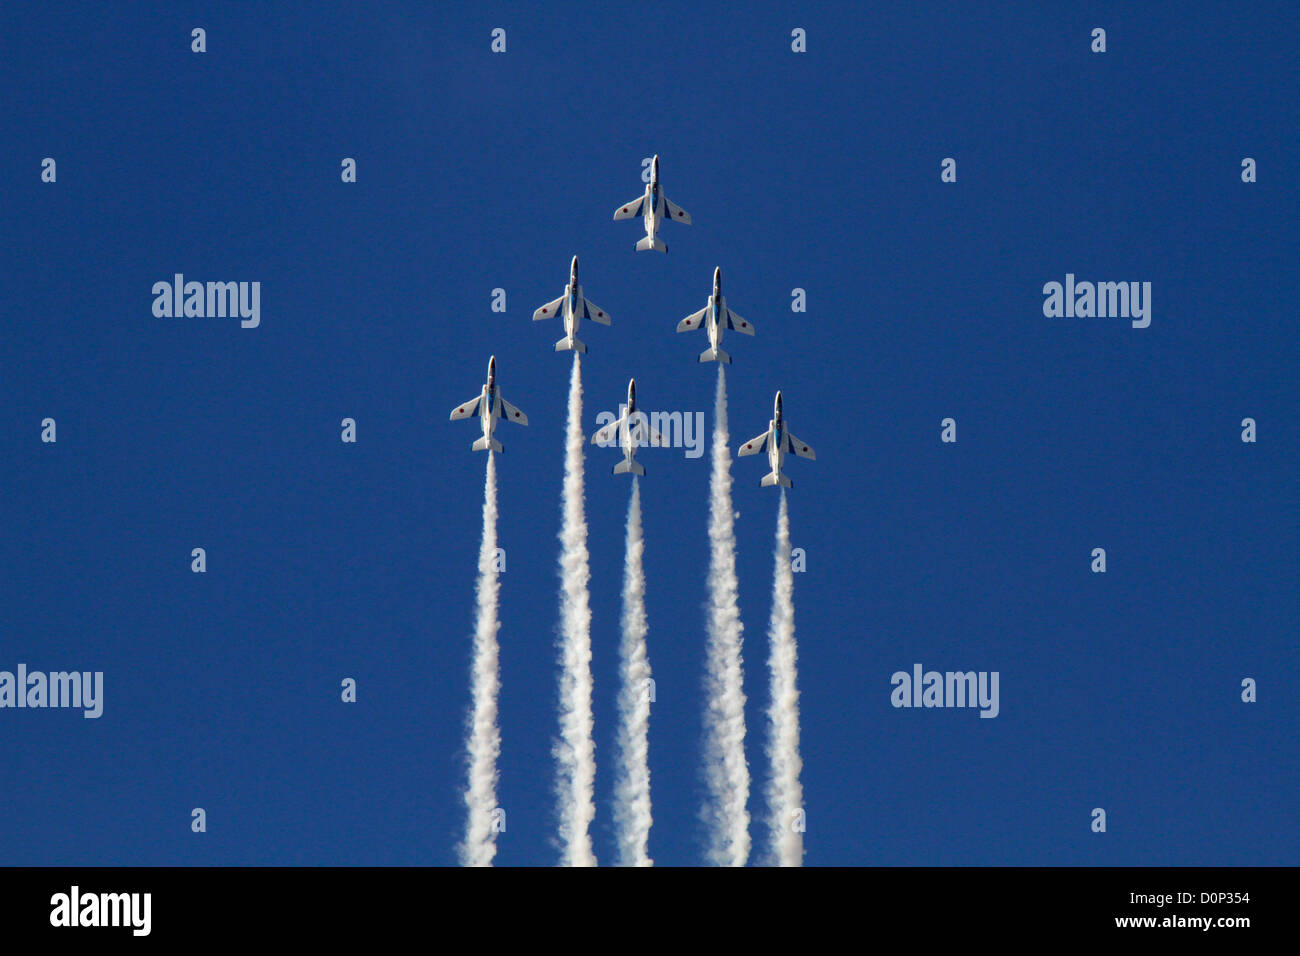 The Blue Impulse aerobatic display Japan Stock Photo - Alamy